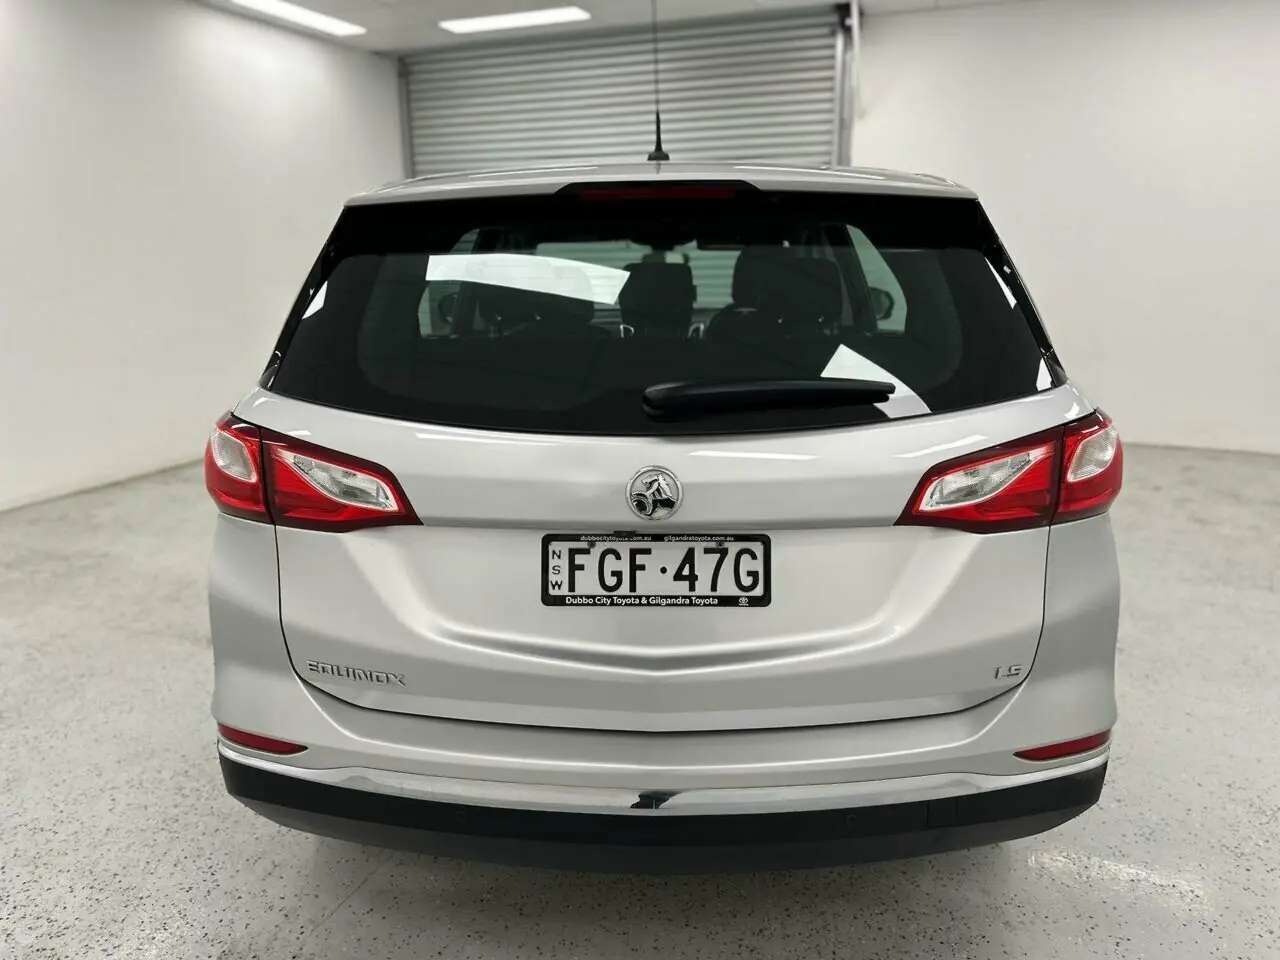 2019 Holden Equinox Image 6